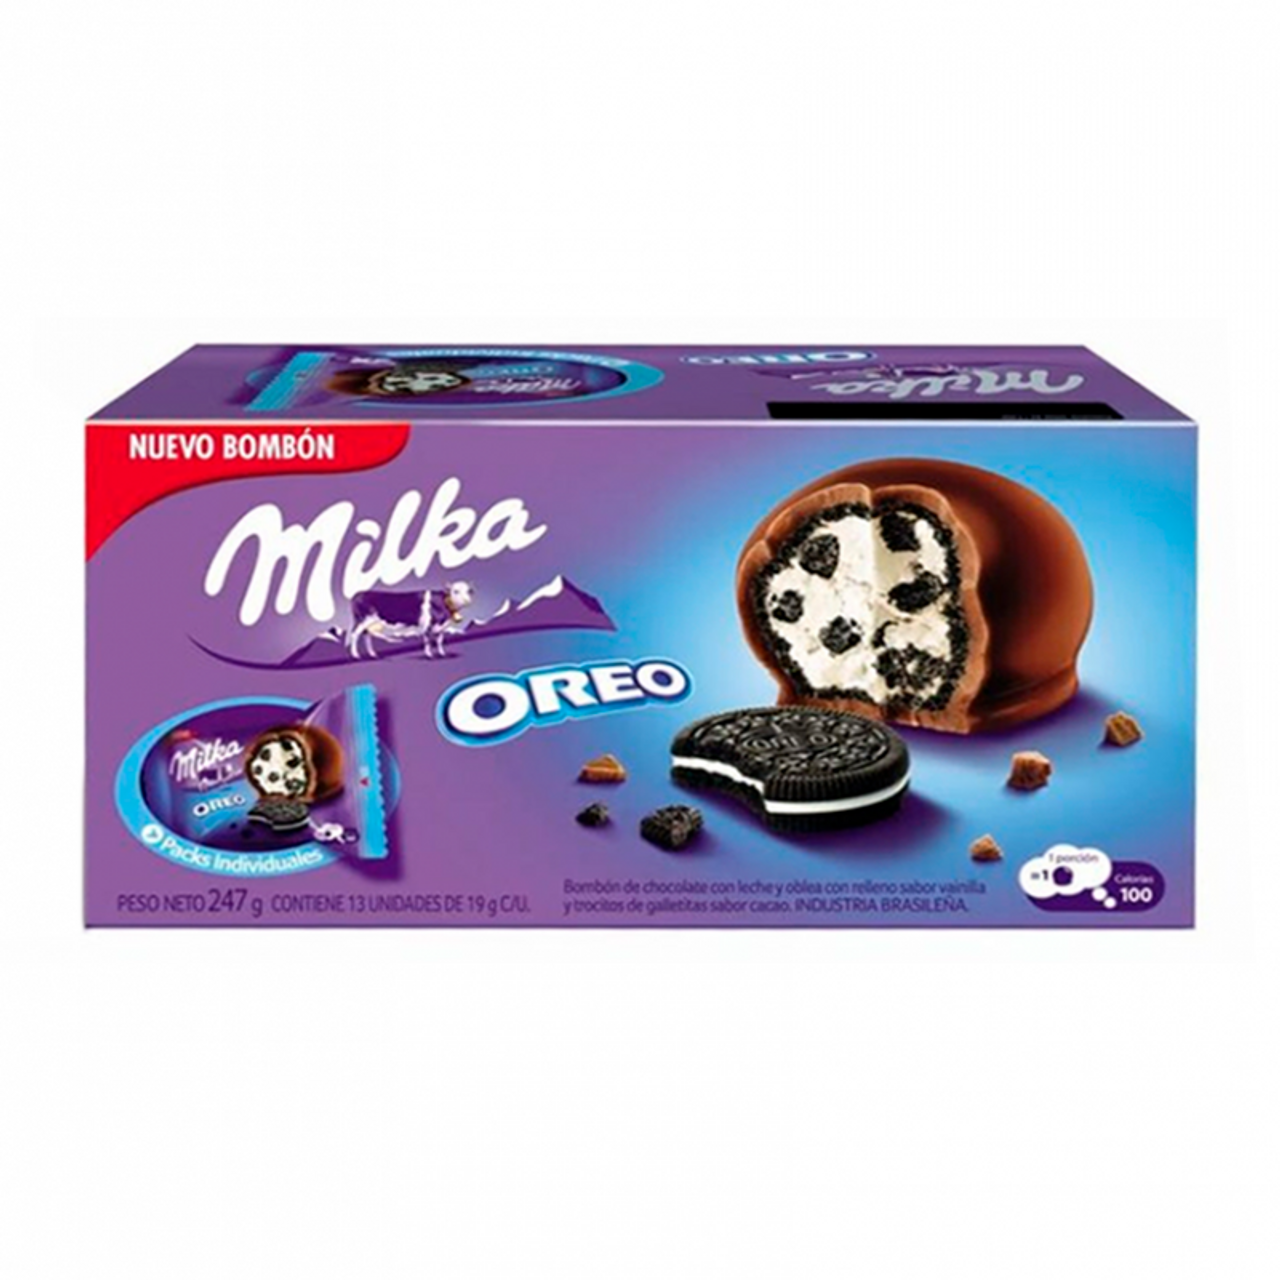 Milka Bombón Milk Chocolate & Oreo Cookies Bites (19g) (13ct)